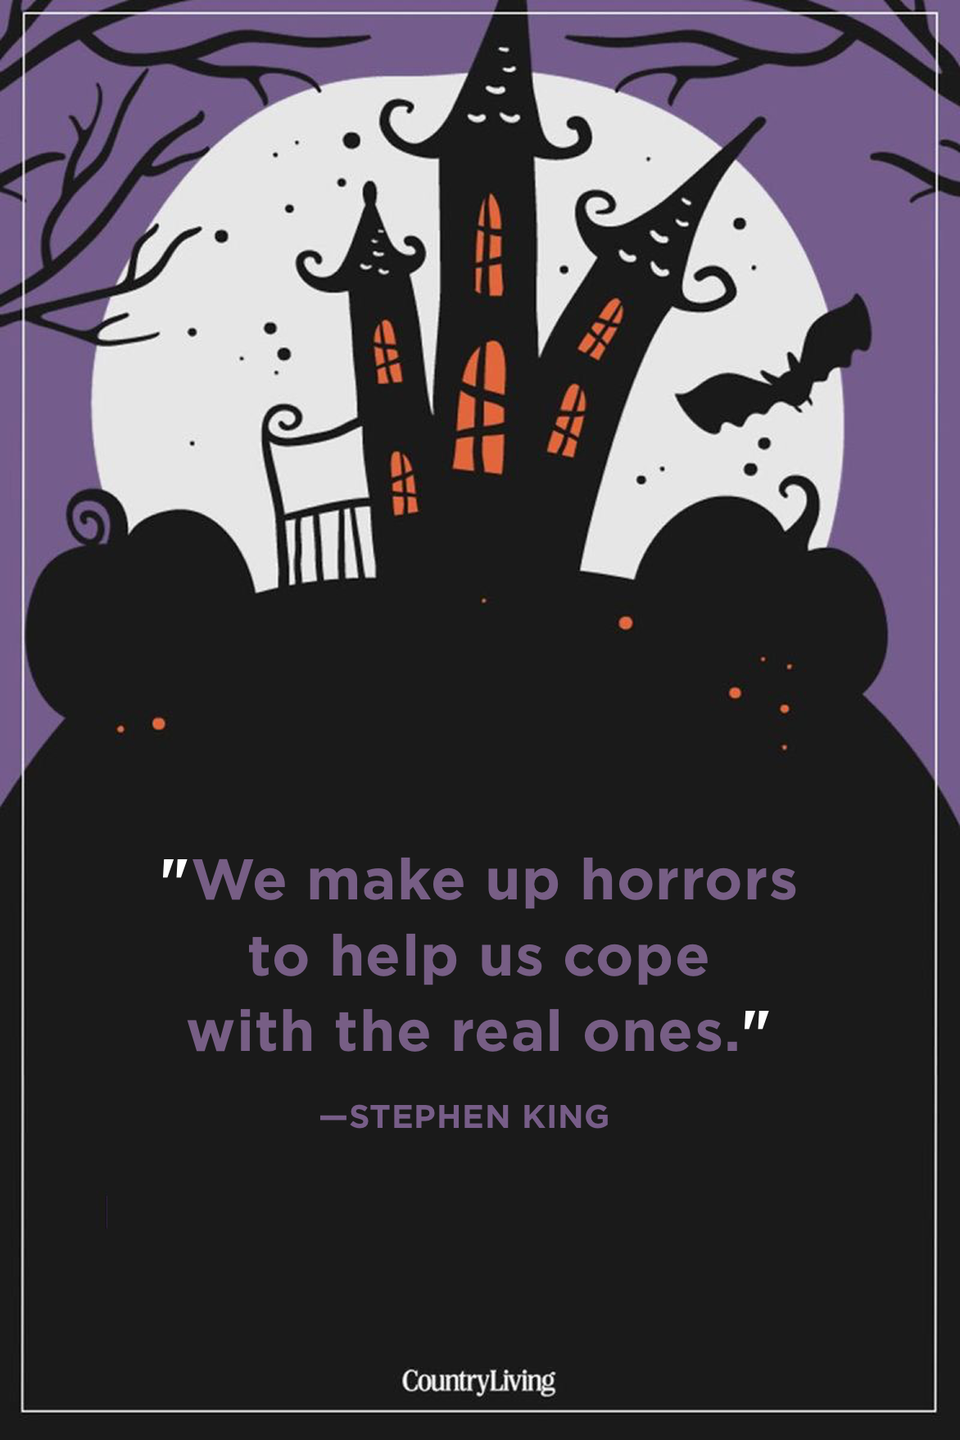 4) Stephen King